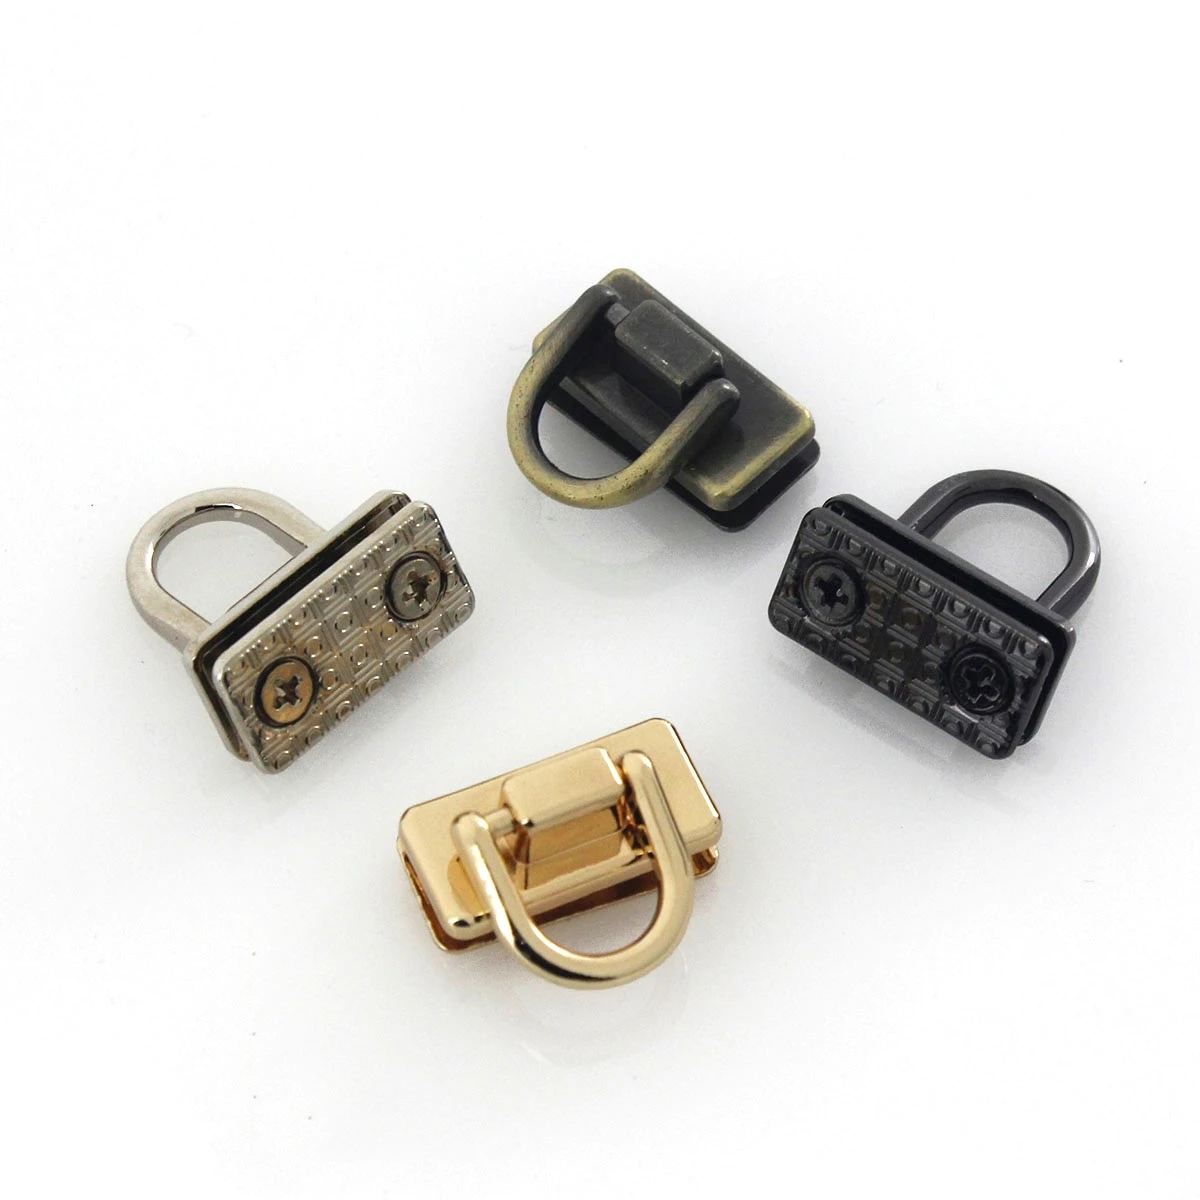 2pcs Fashion Metal Bag Side Edge Hang Buckle Clip With D Rings for DIY Leather Craft Bag Strap Belt Handle Shoulder Accessories